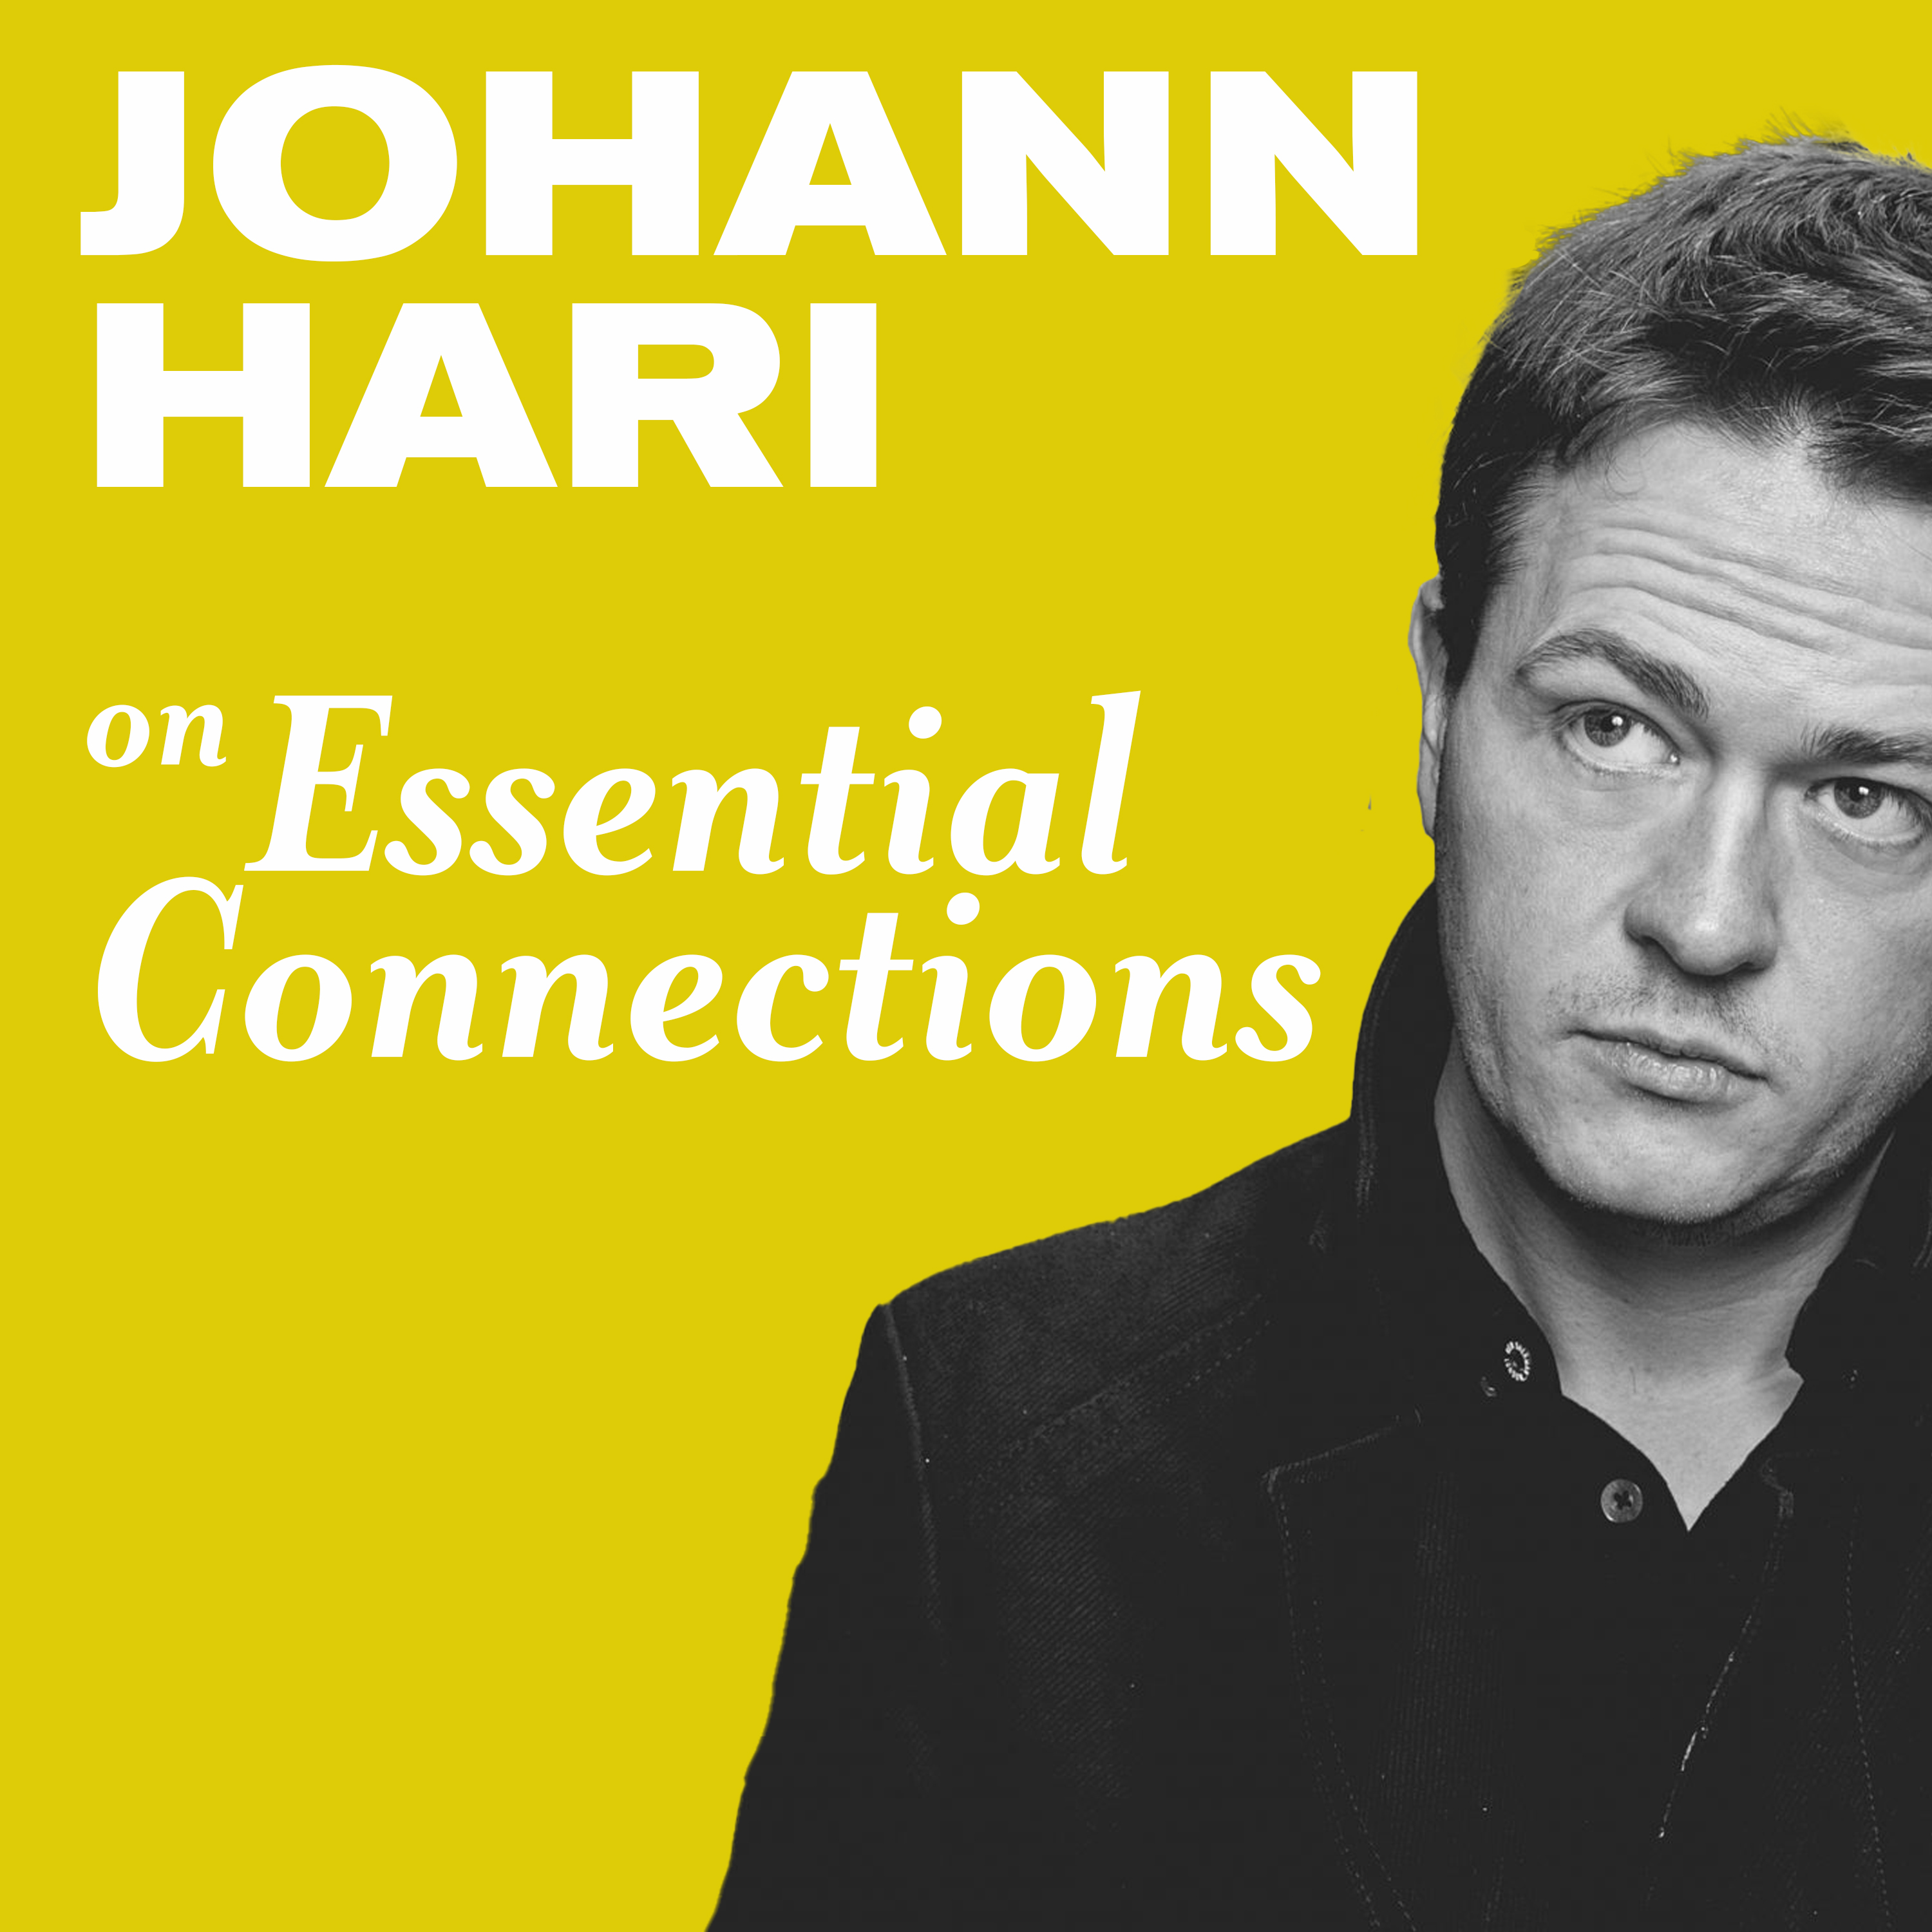 Johann Hari on Essential Connections